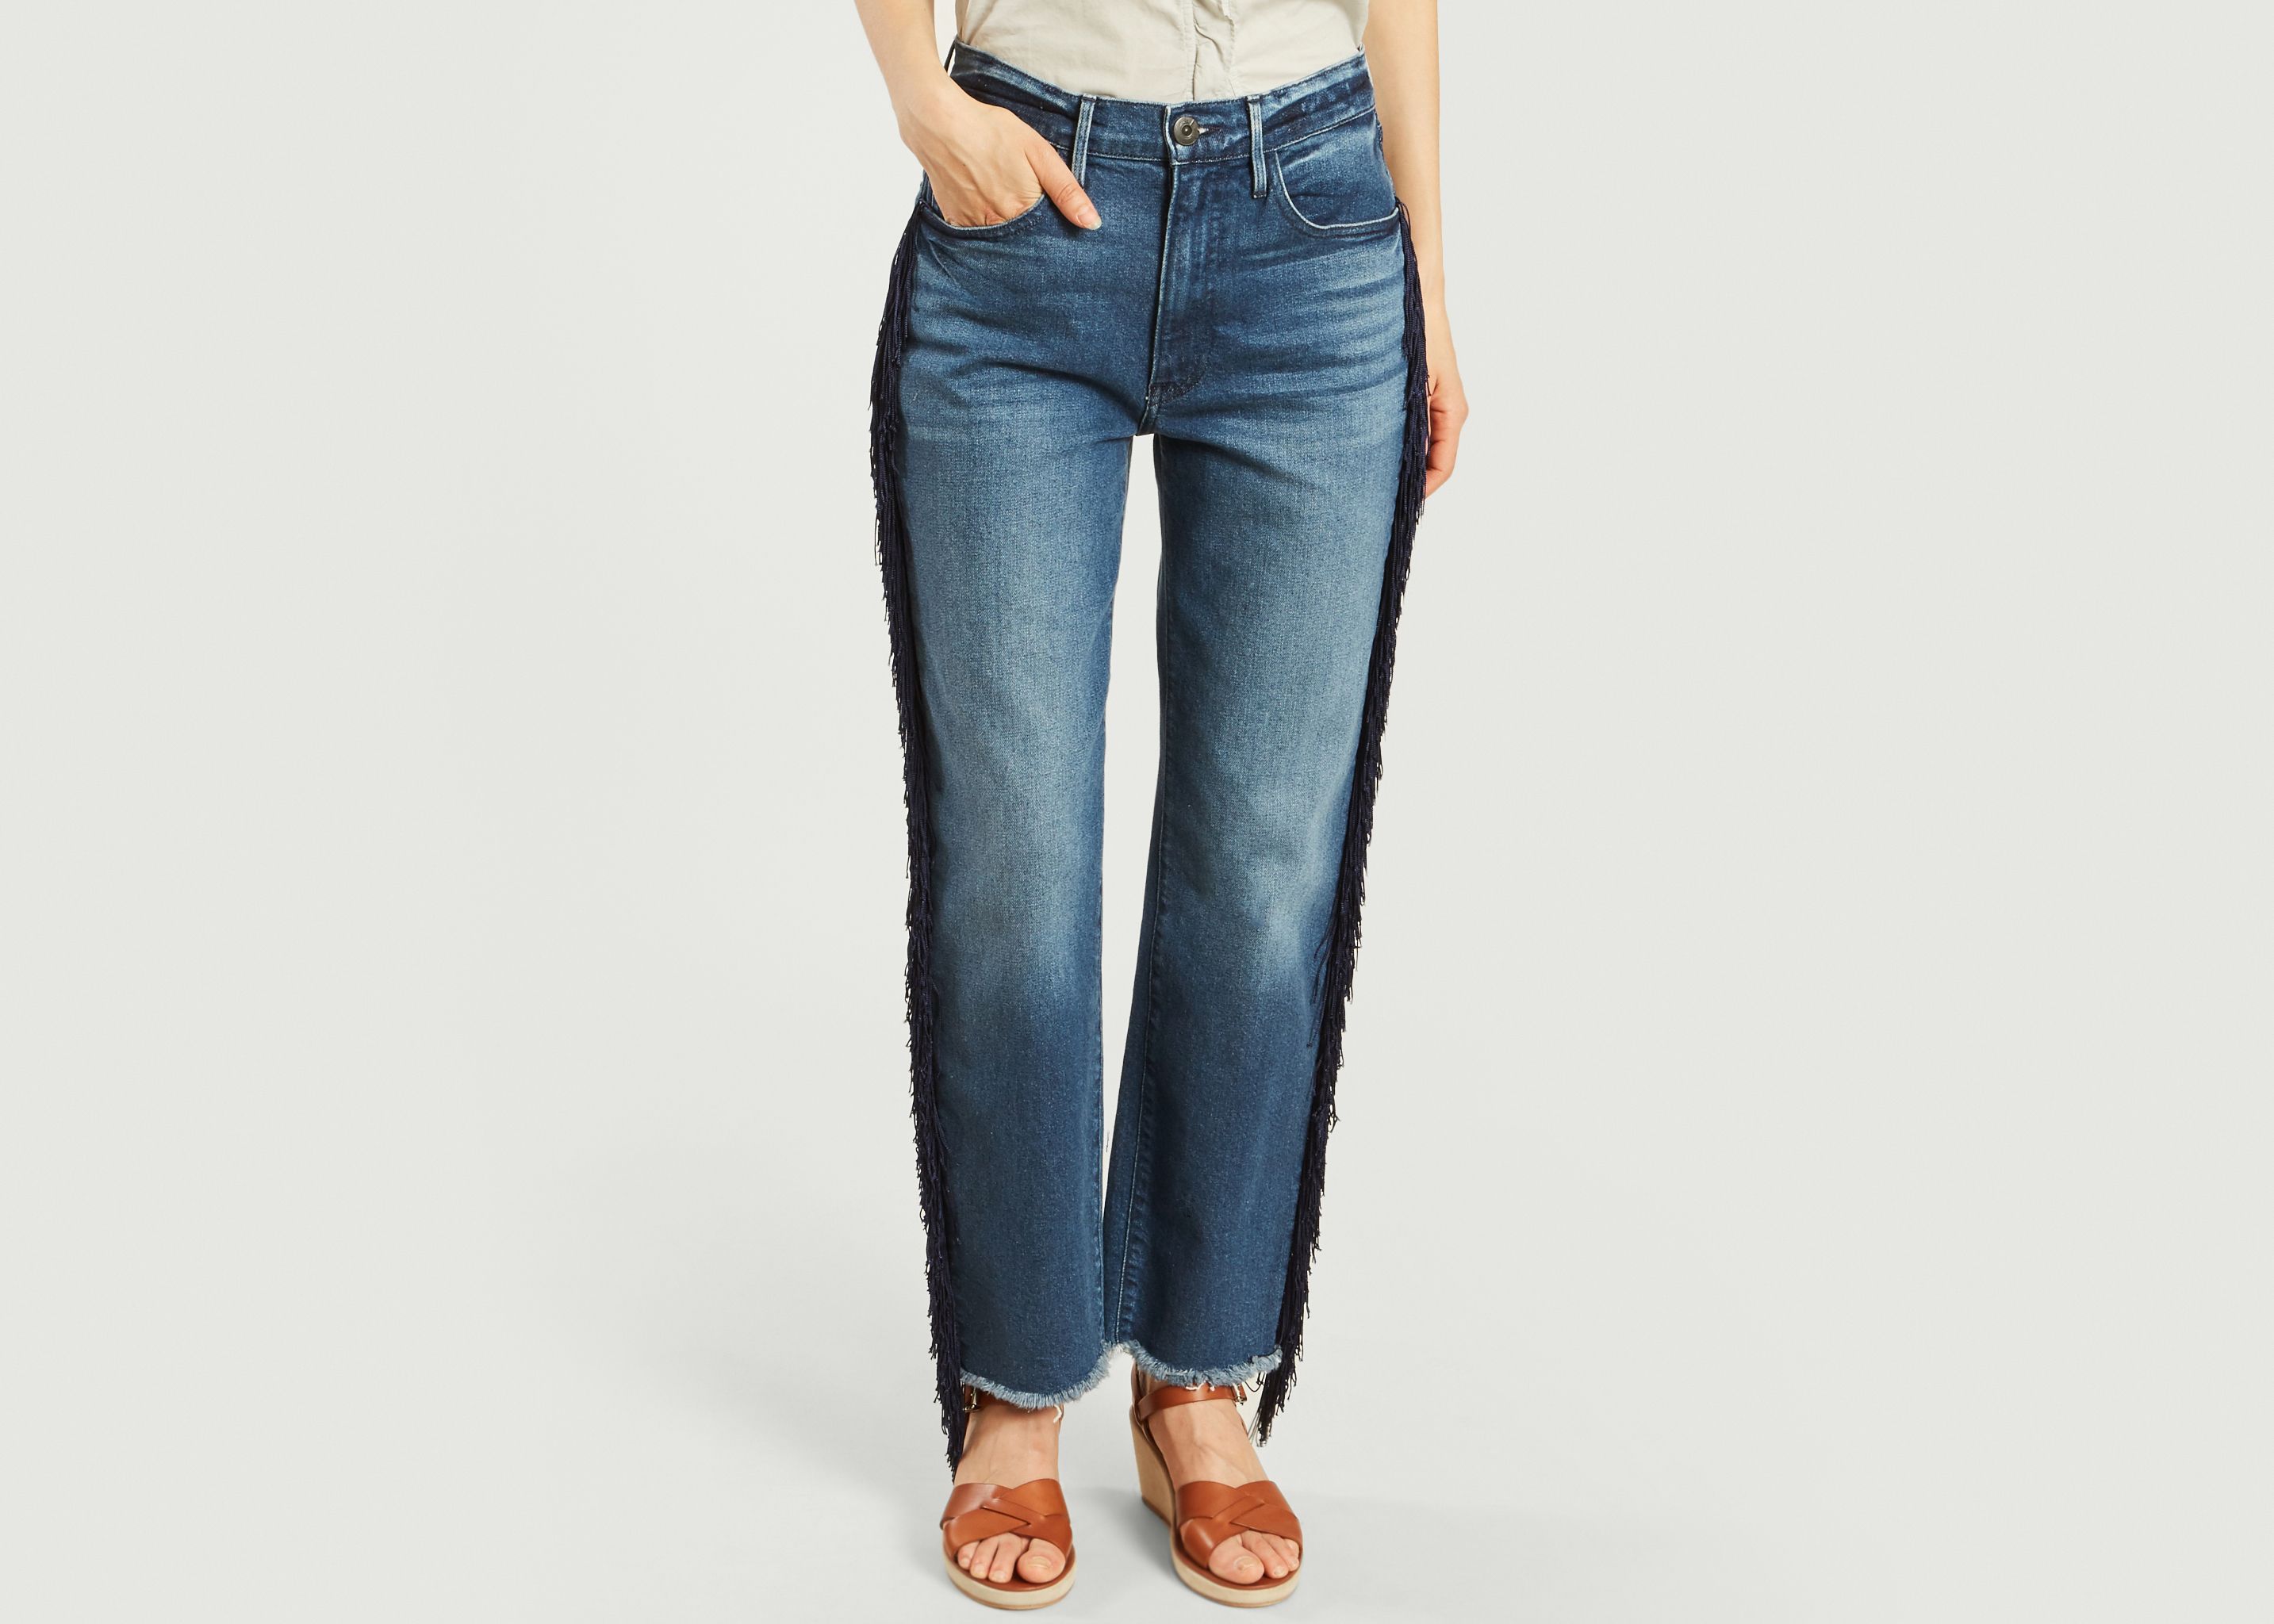 W3 Higher Crop Jeans - 3x1